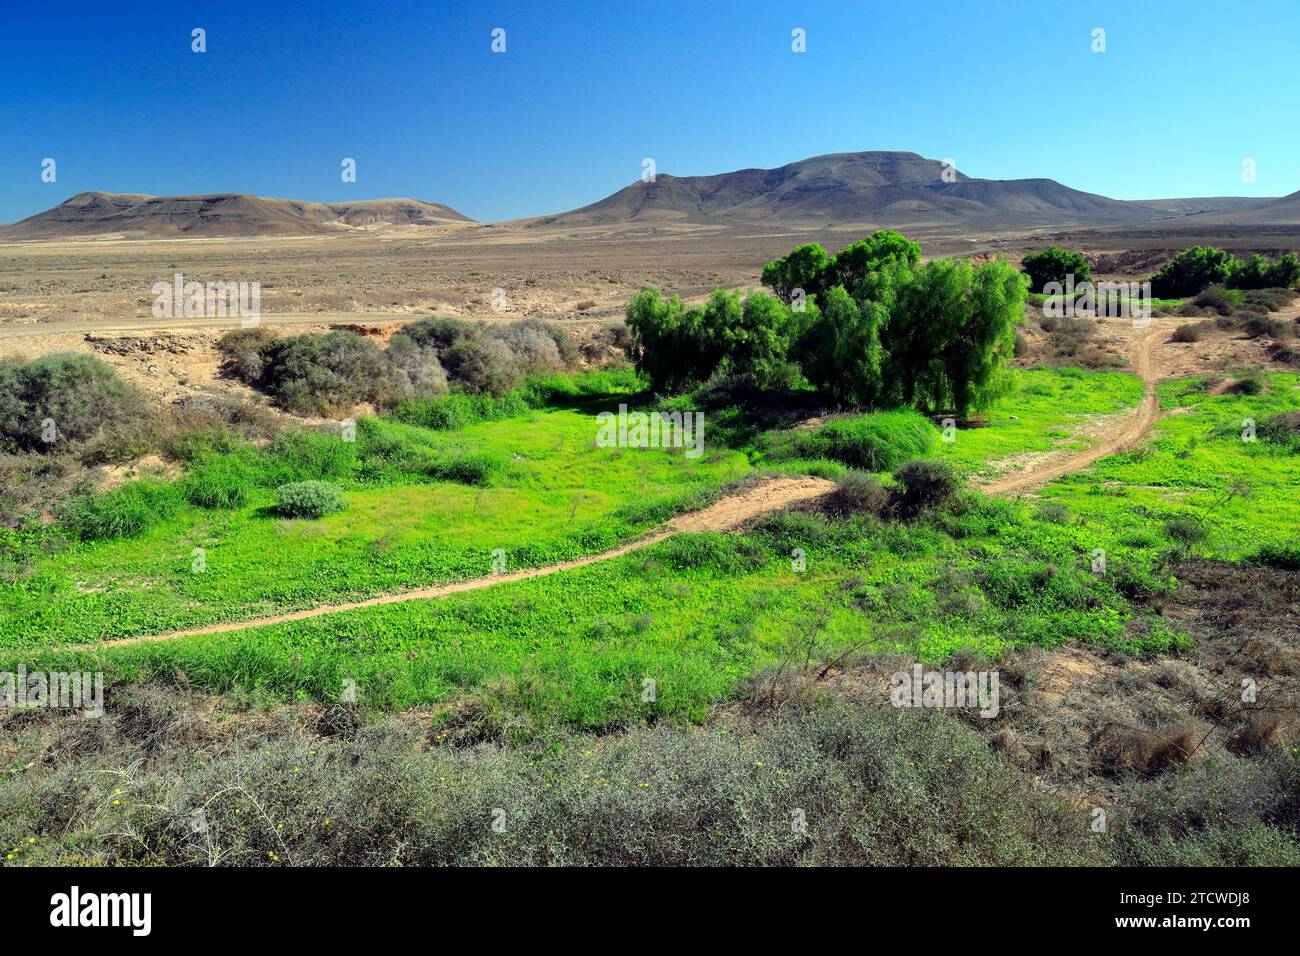 Green oasis amongs the barren Malpais desert landscape of Fueteventura, El Cotillo, Fuerteventura, Canary Islands, Spain. Stock Photo